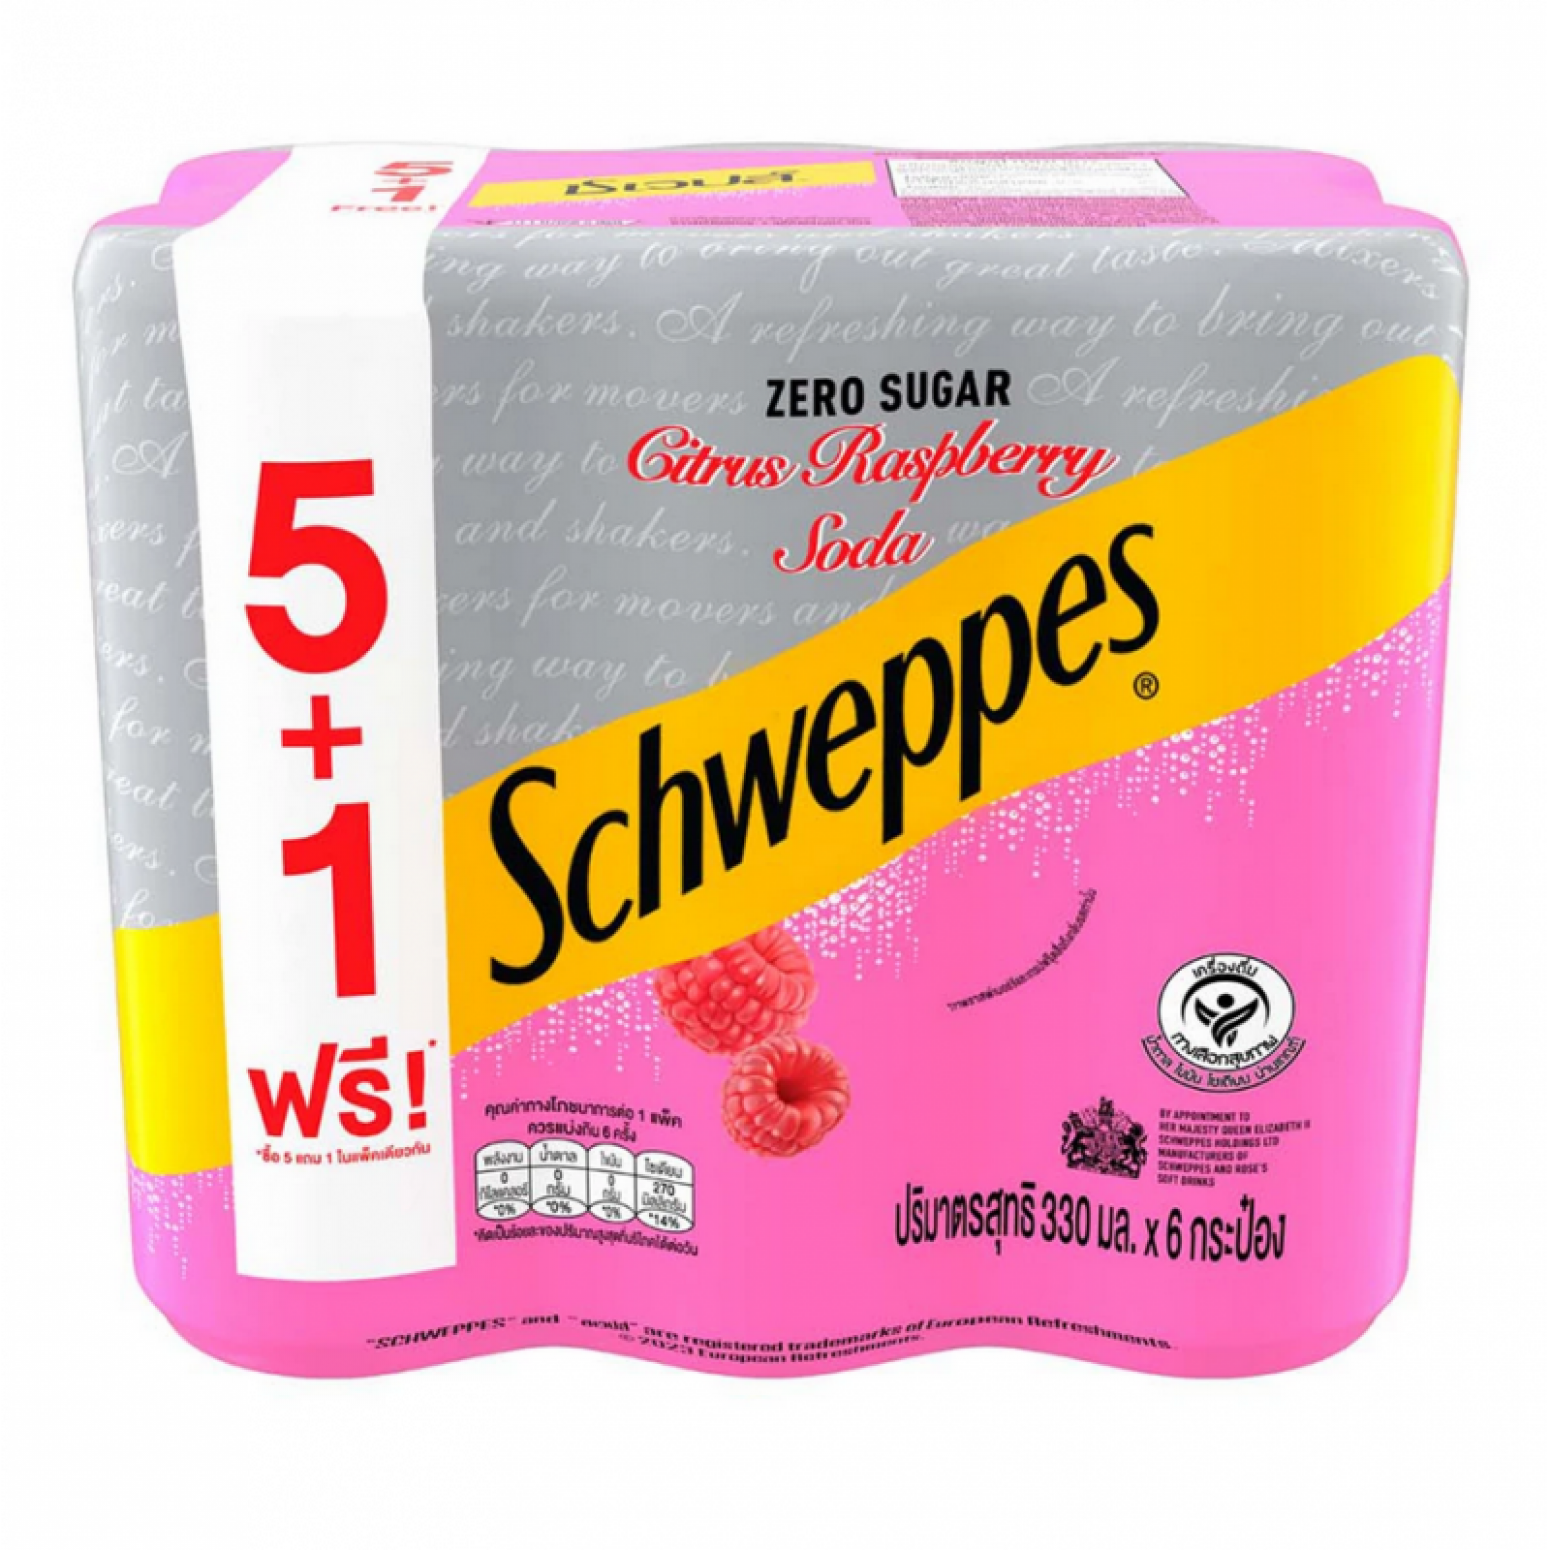 Schweppes Zero Sugar Citrus Raspberry Soda 330ml. Pack 5 Free 1